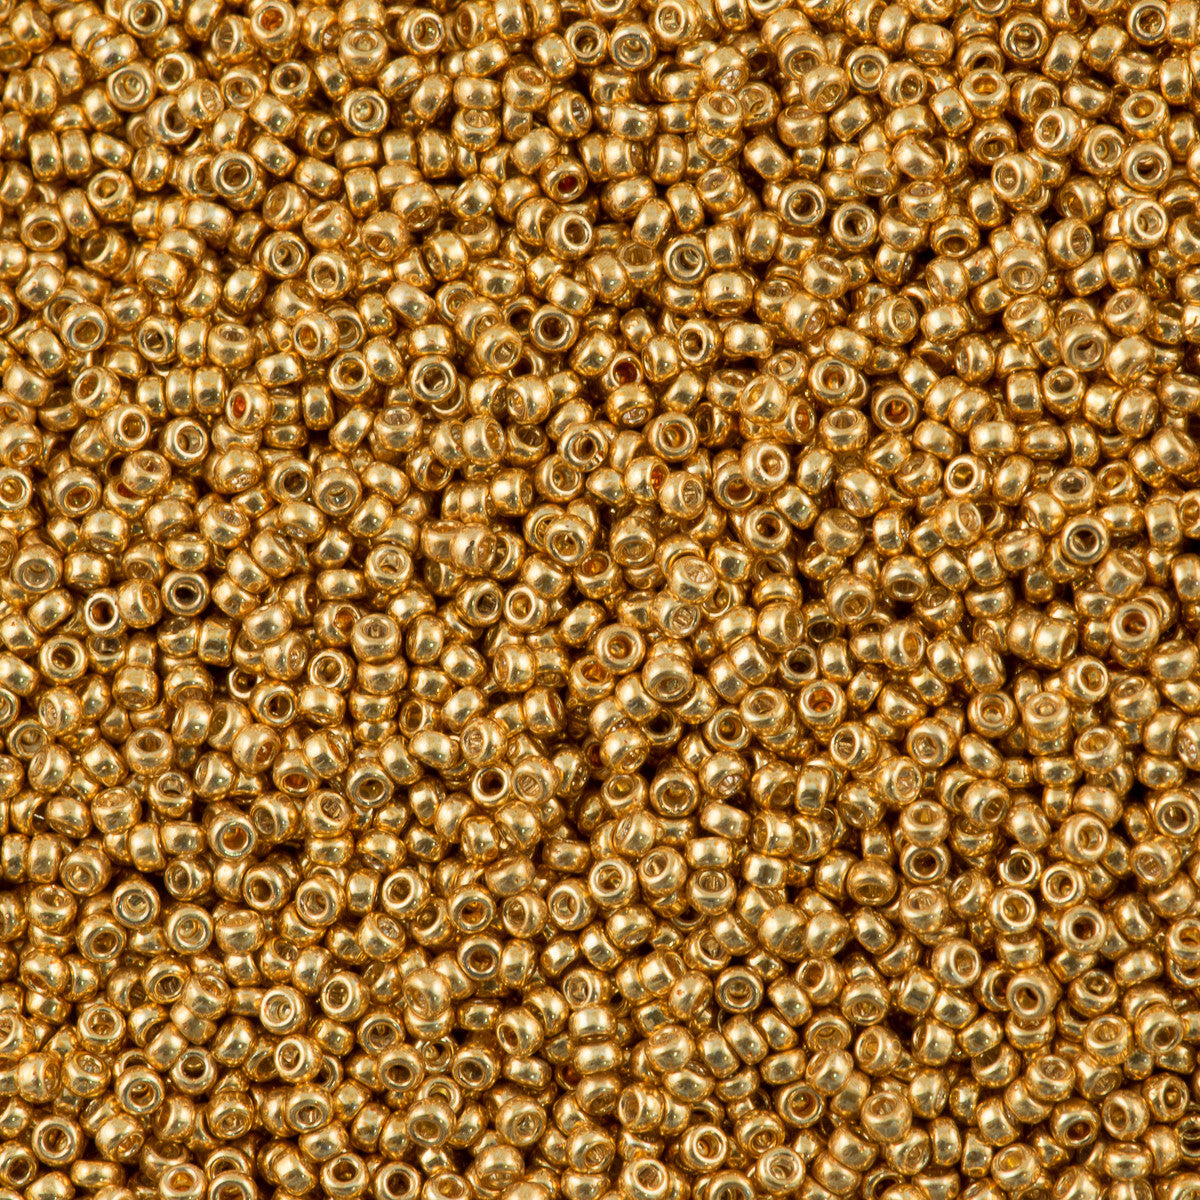 15/0 Metallic Gold Seed Beads (Tiny)